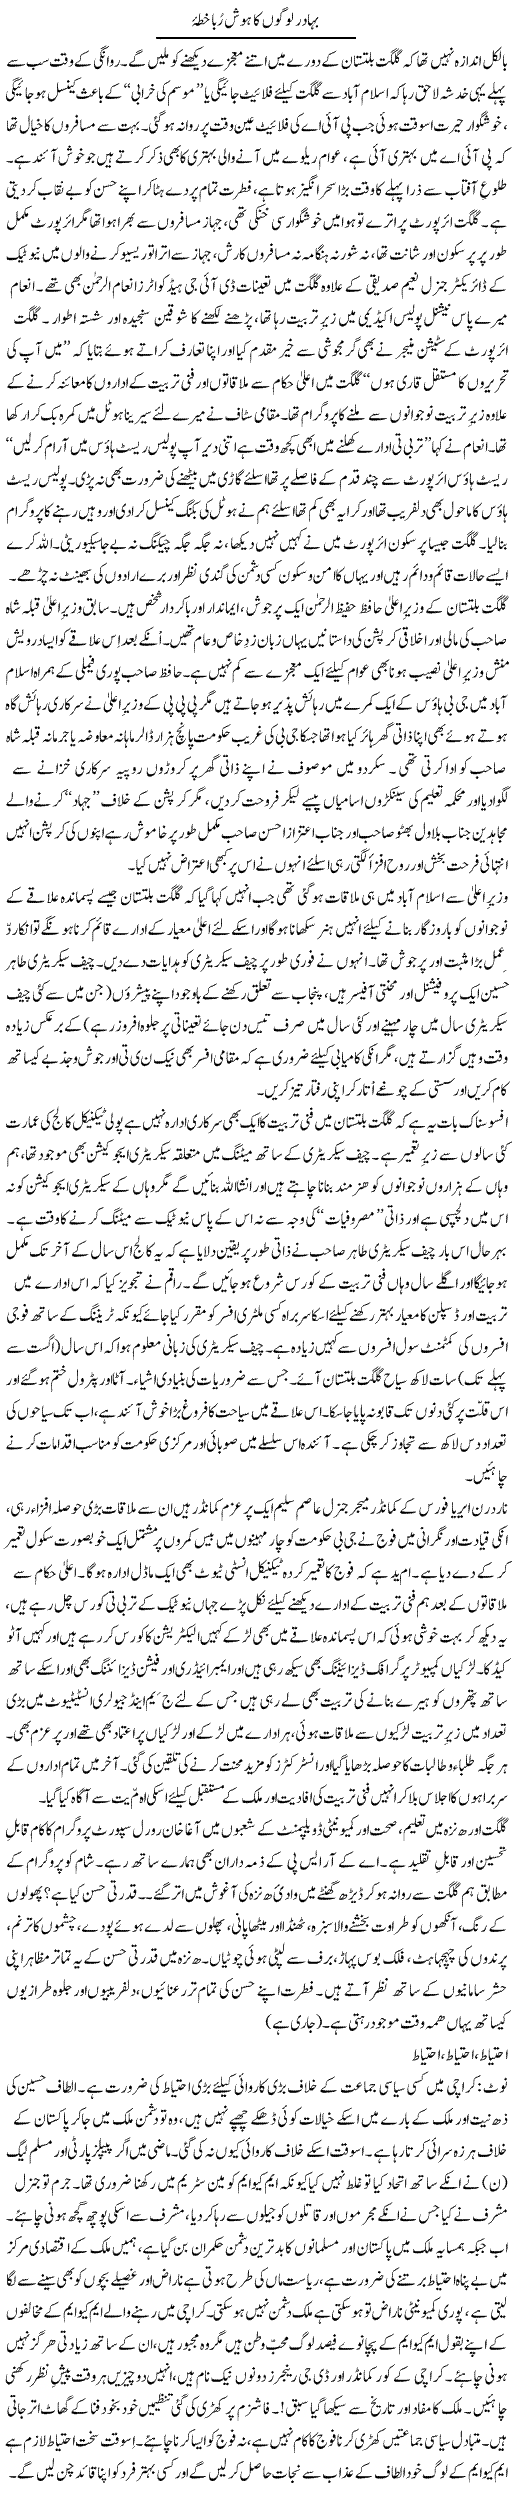 Bahadur Logon Ka Hosh Rubaa Khitta | Zulfiqar Ahmed Cheema | Daily Urdu Columns